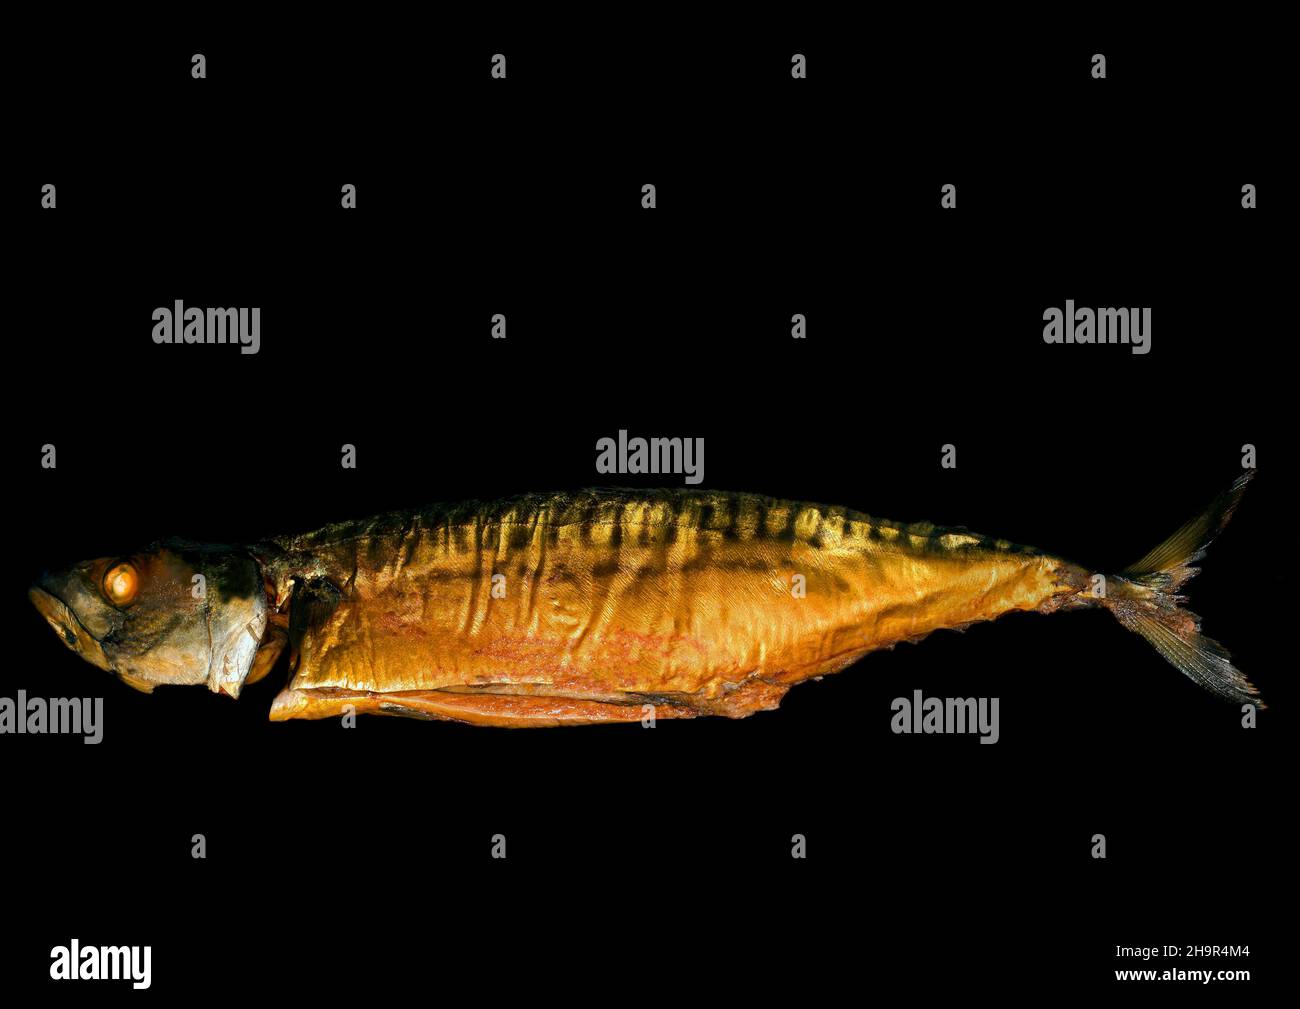 Smoked atlantic mackerel (Scomber scombrus), studio photography with black background Stock Photo